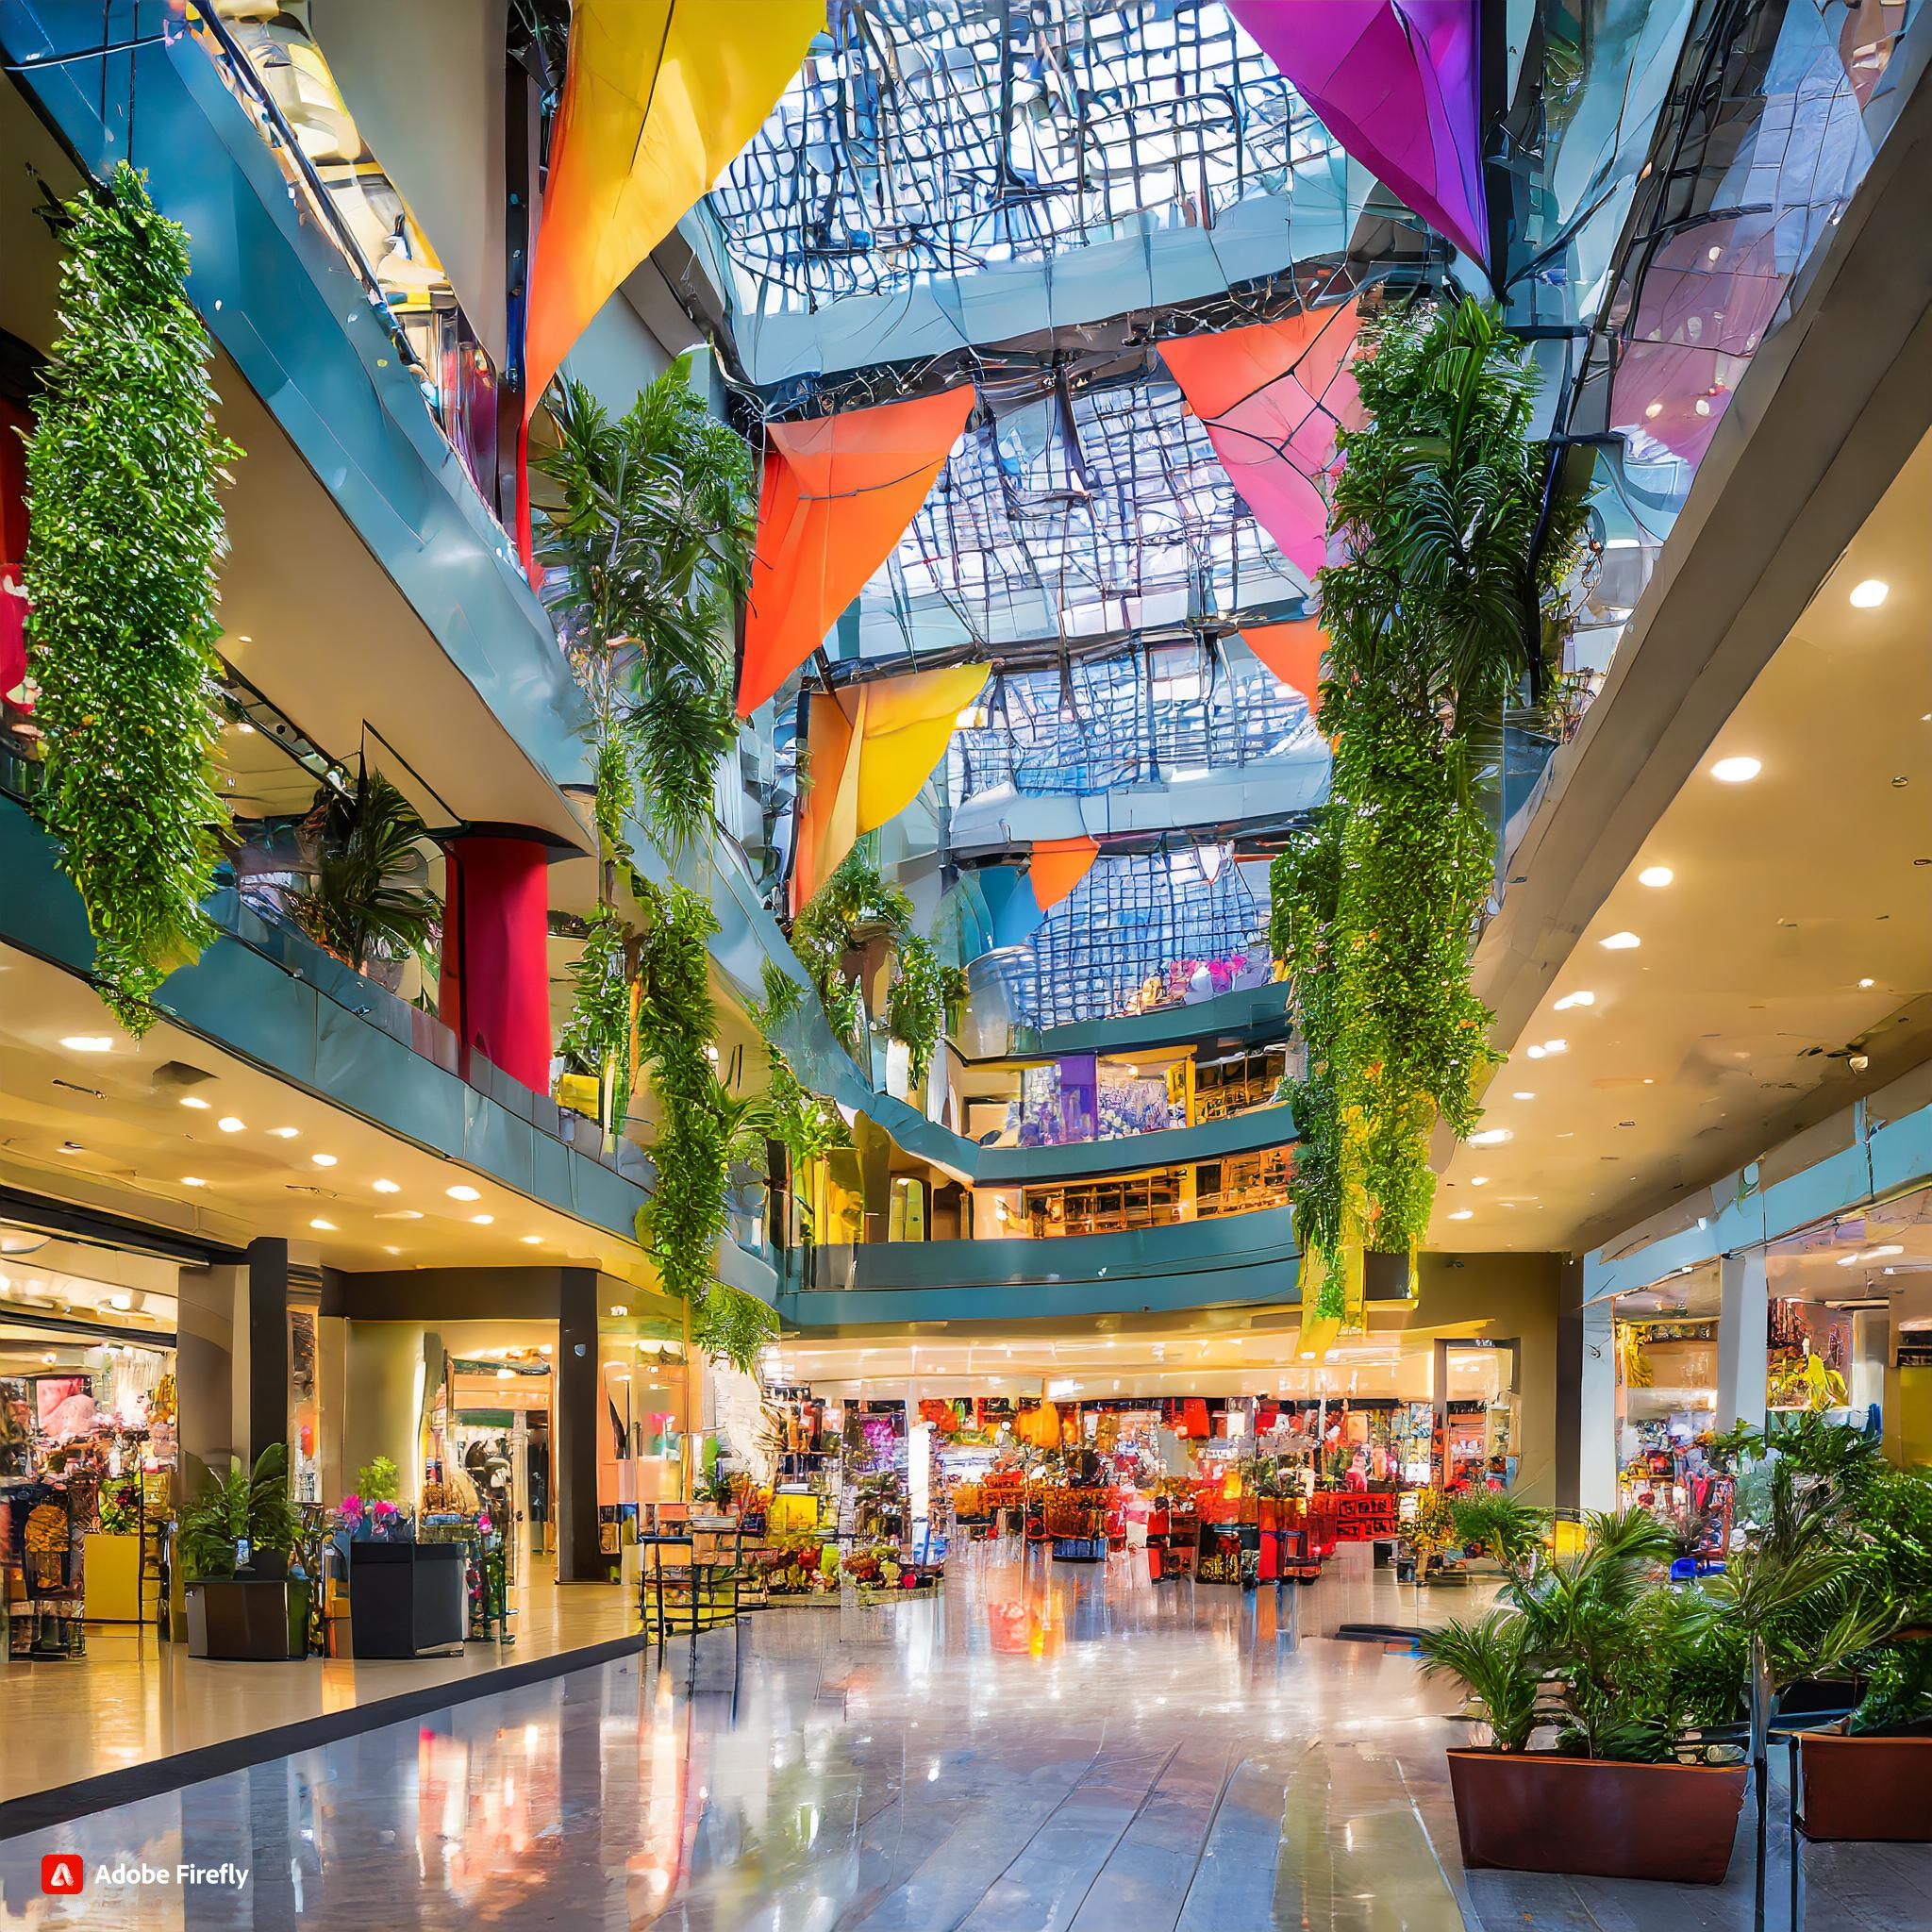 Firefly photo of shopping mall